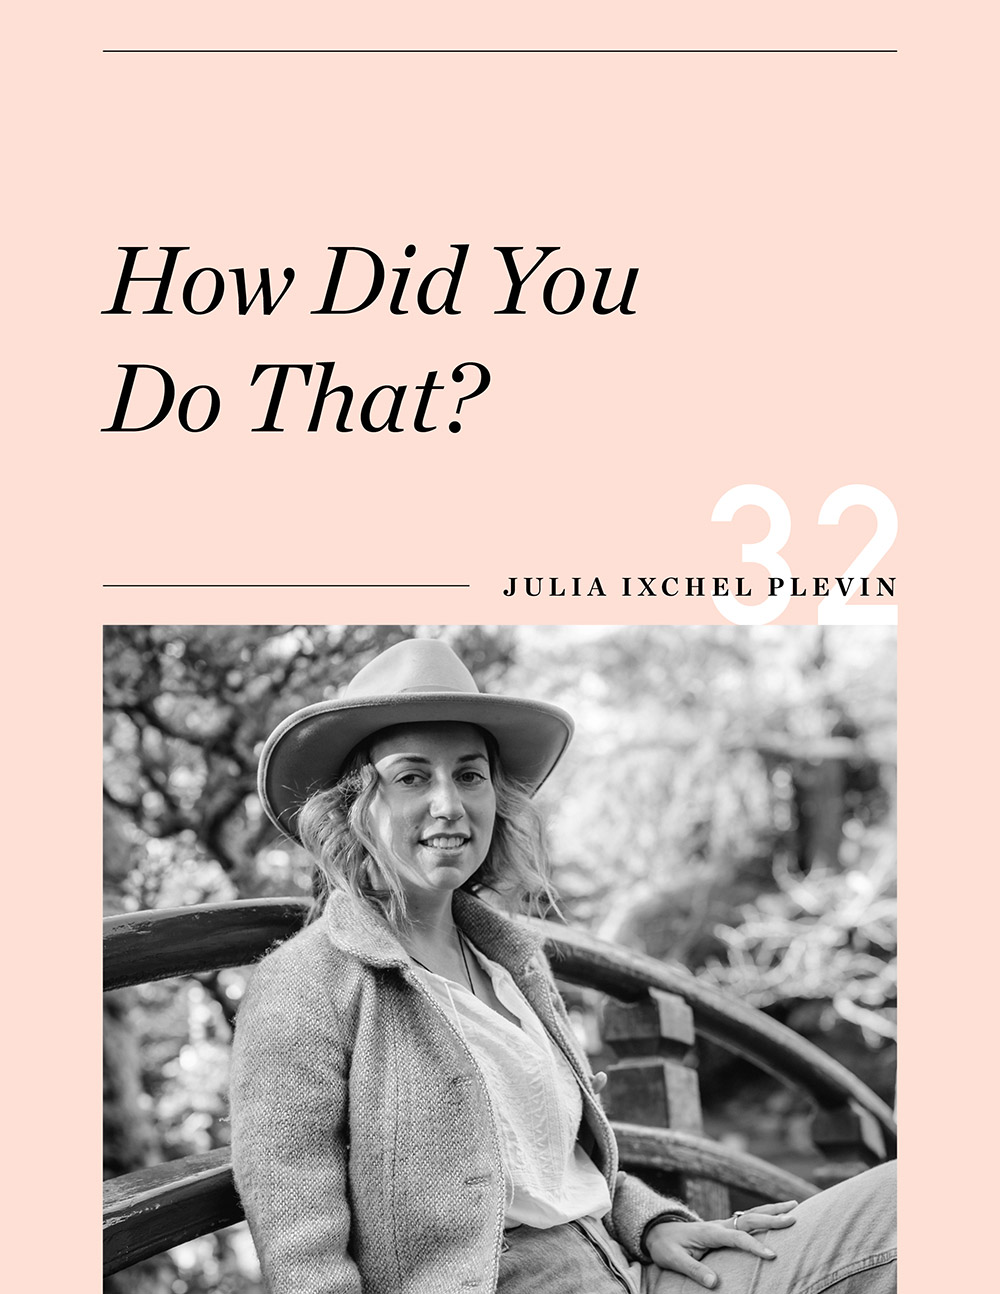 Ellen Fondiler | How Did You Do That: An Interview with Julia Ixchel Plevin